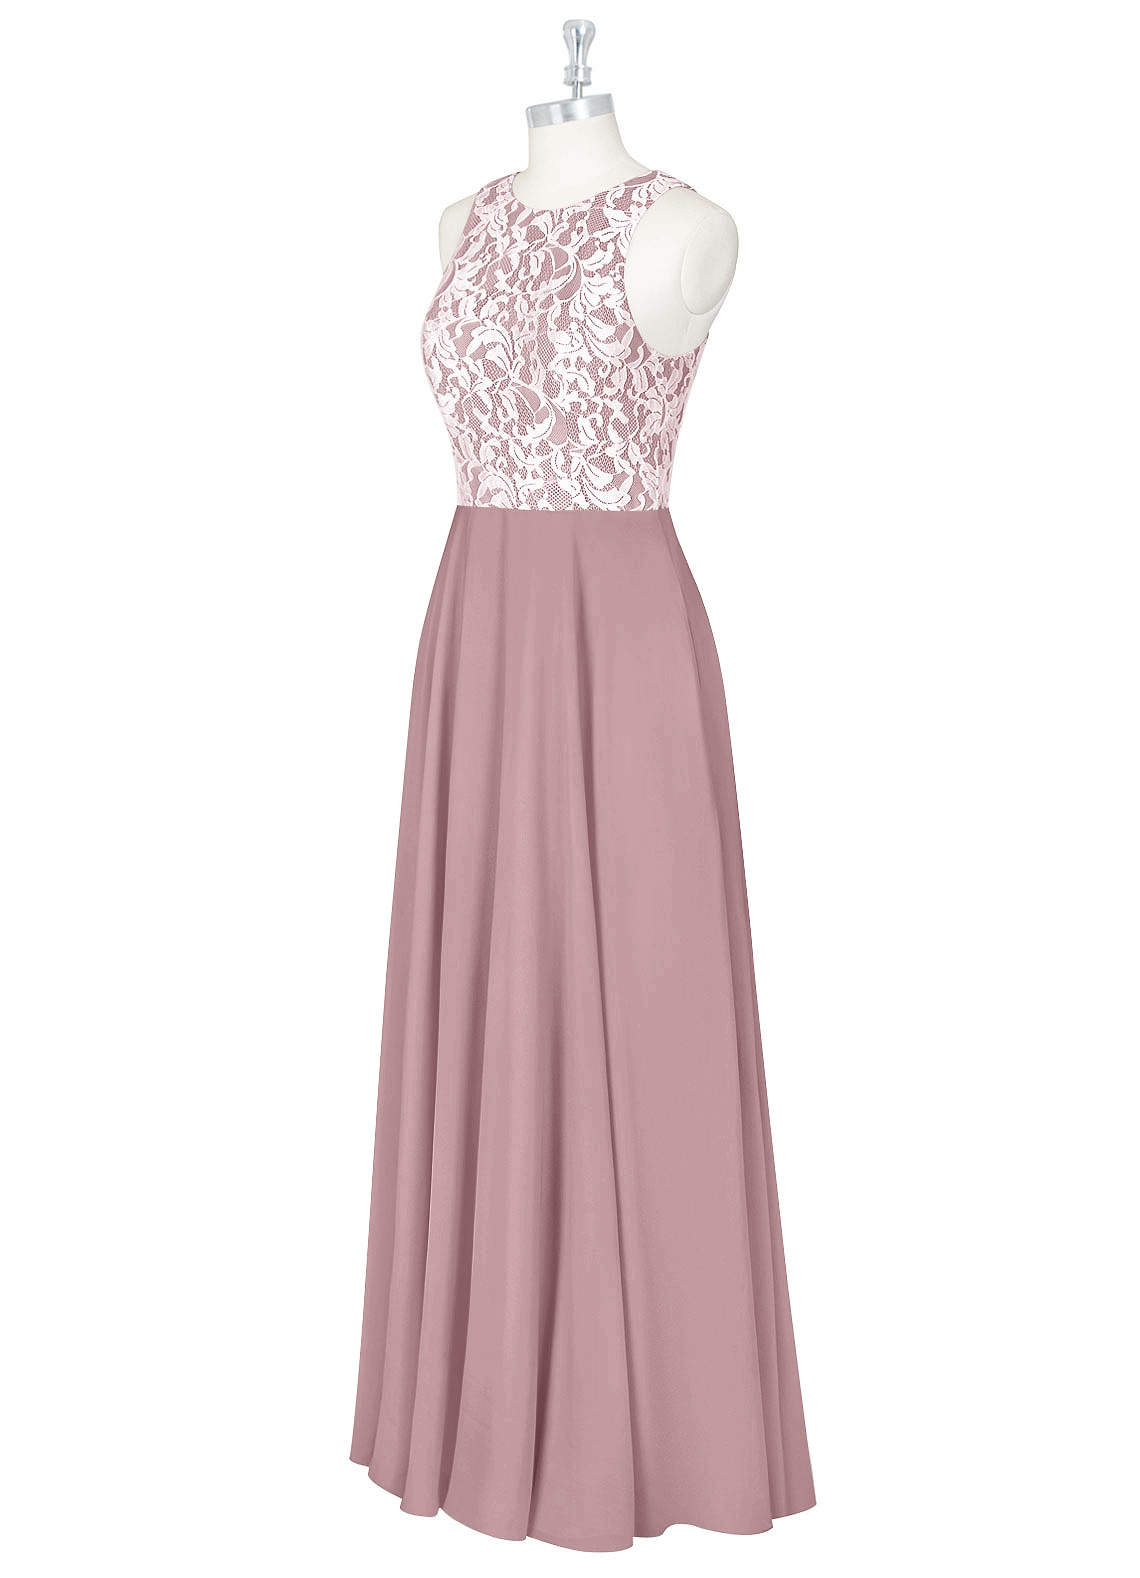 Azazie Kate Bridesmaid Dresses A-Line Lace Chiffon Floor-Length Dress image1